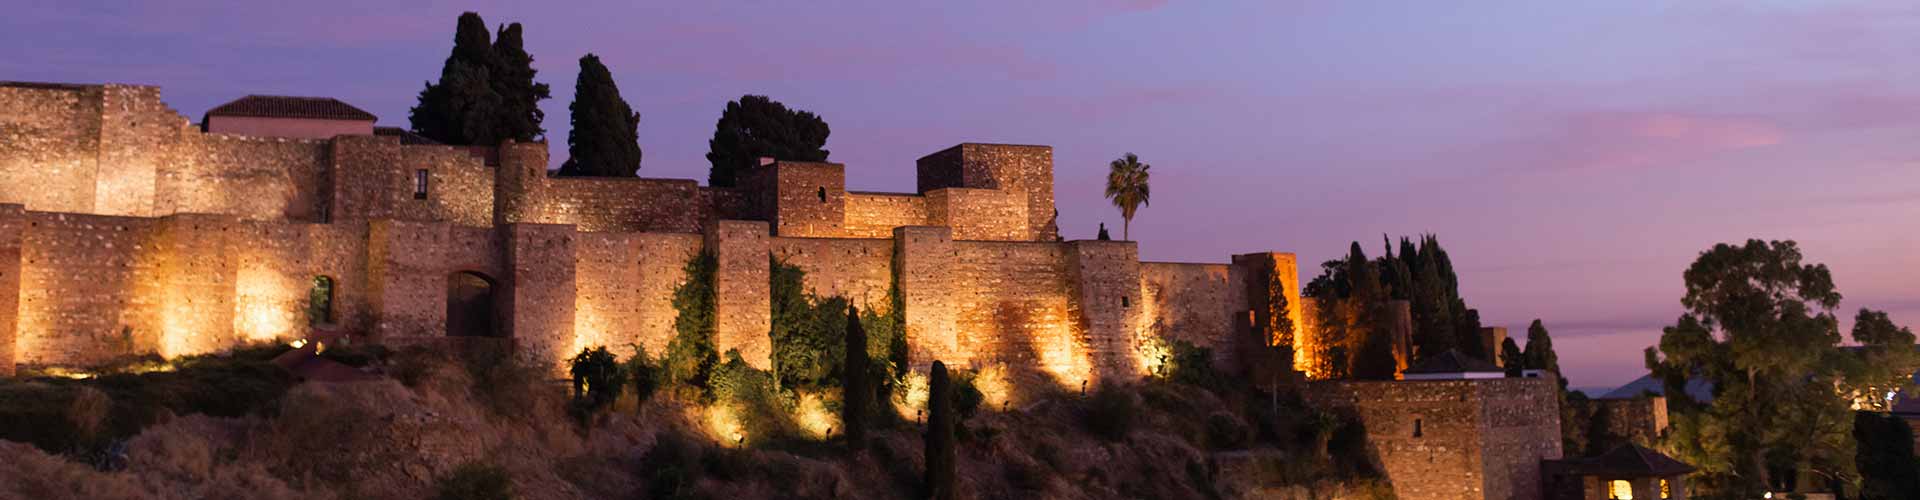 The Castillo de Gibralfaro, a 14th-century castle perched on a hill, offering panoramic views of Malaga